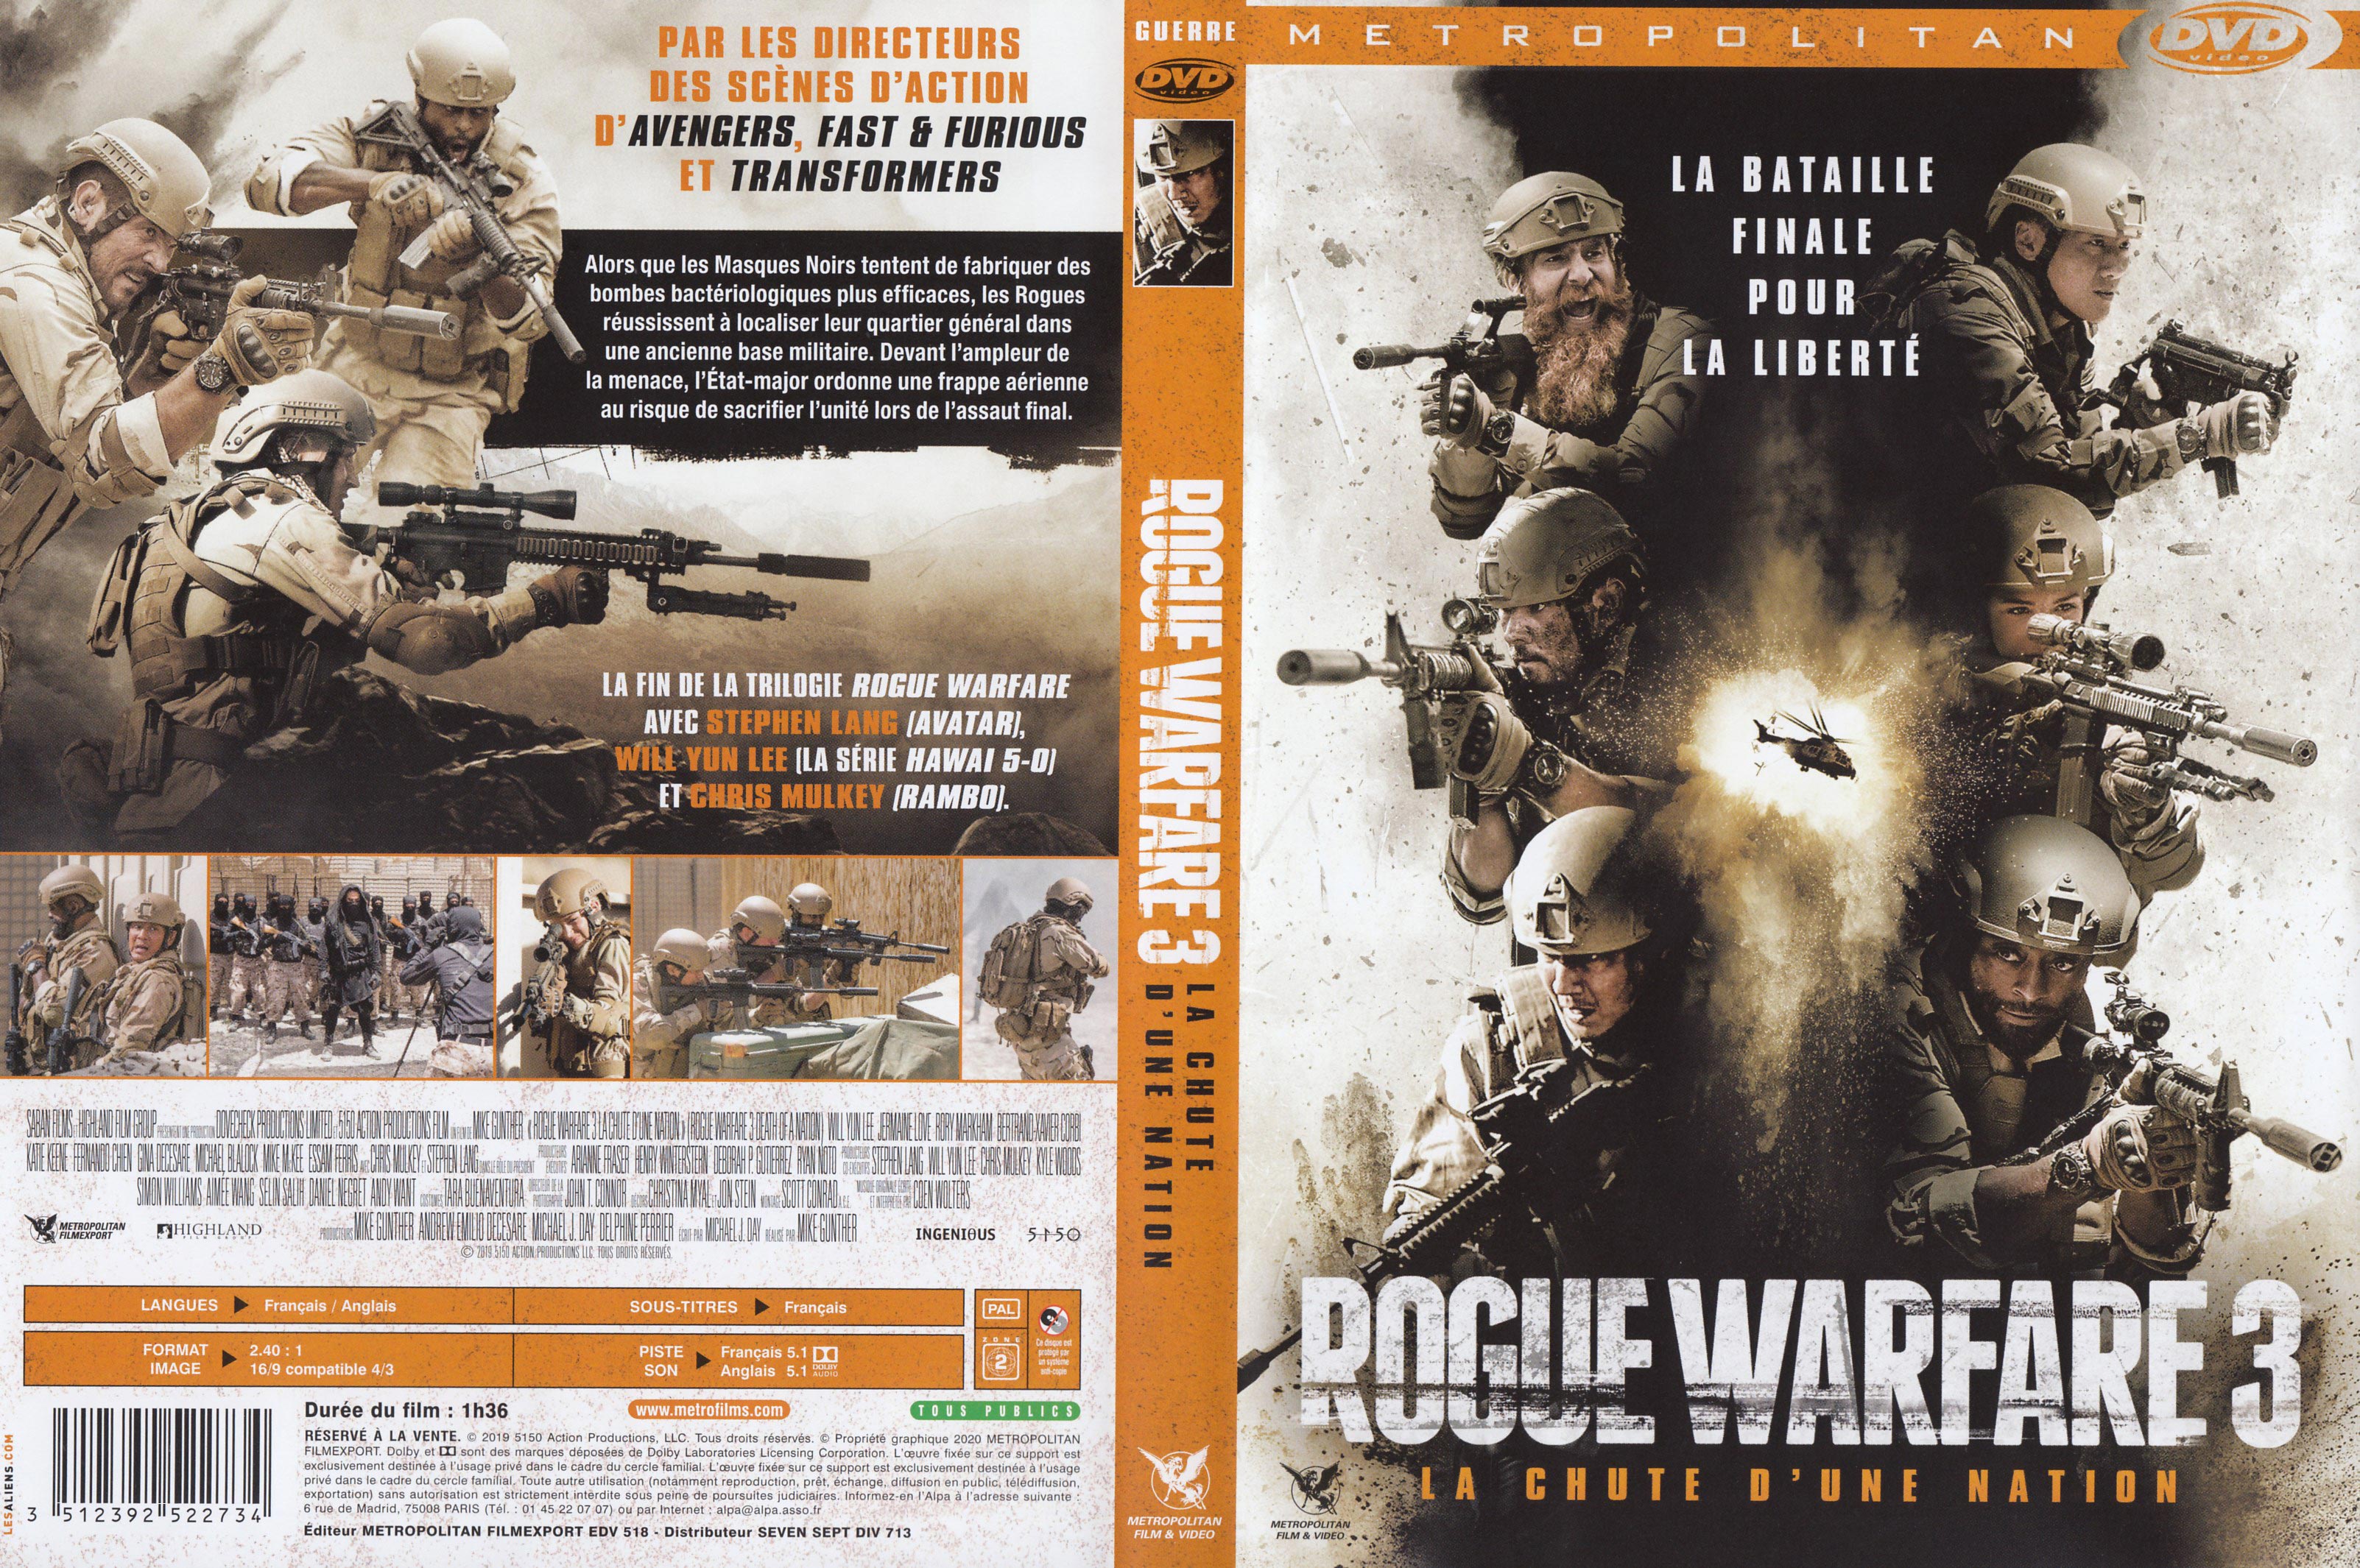 Jaquette DVD Rogue warfare 3 La chute d